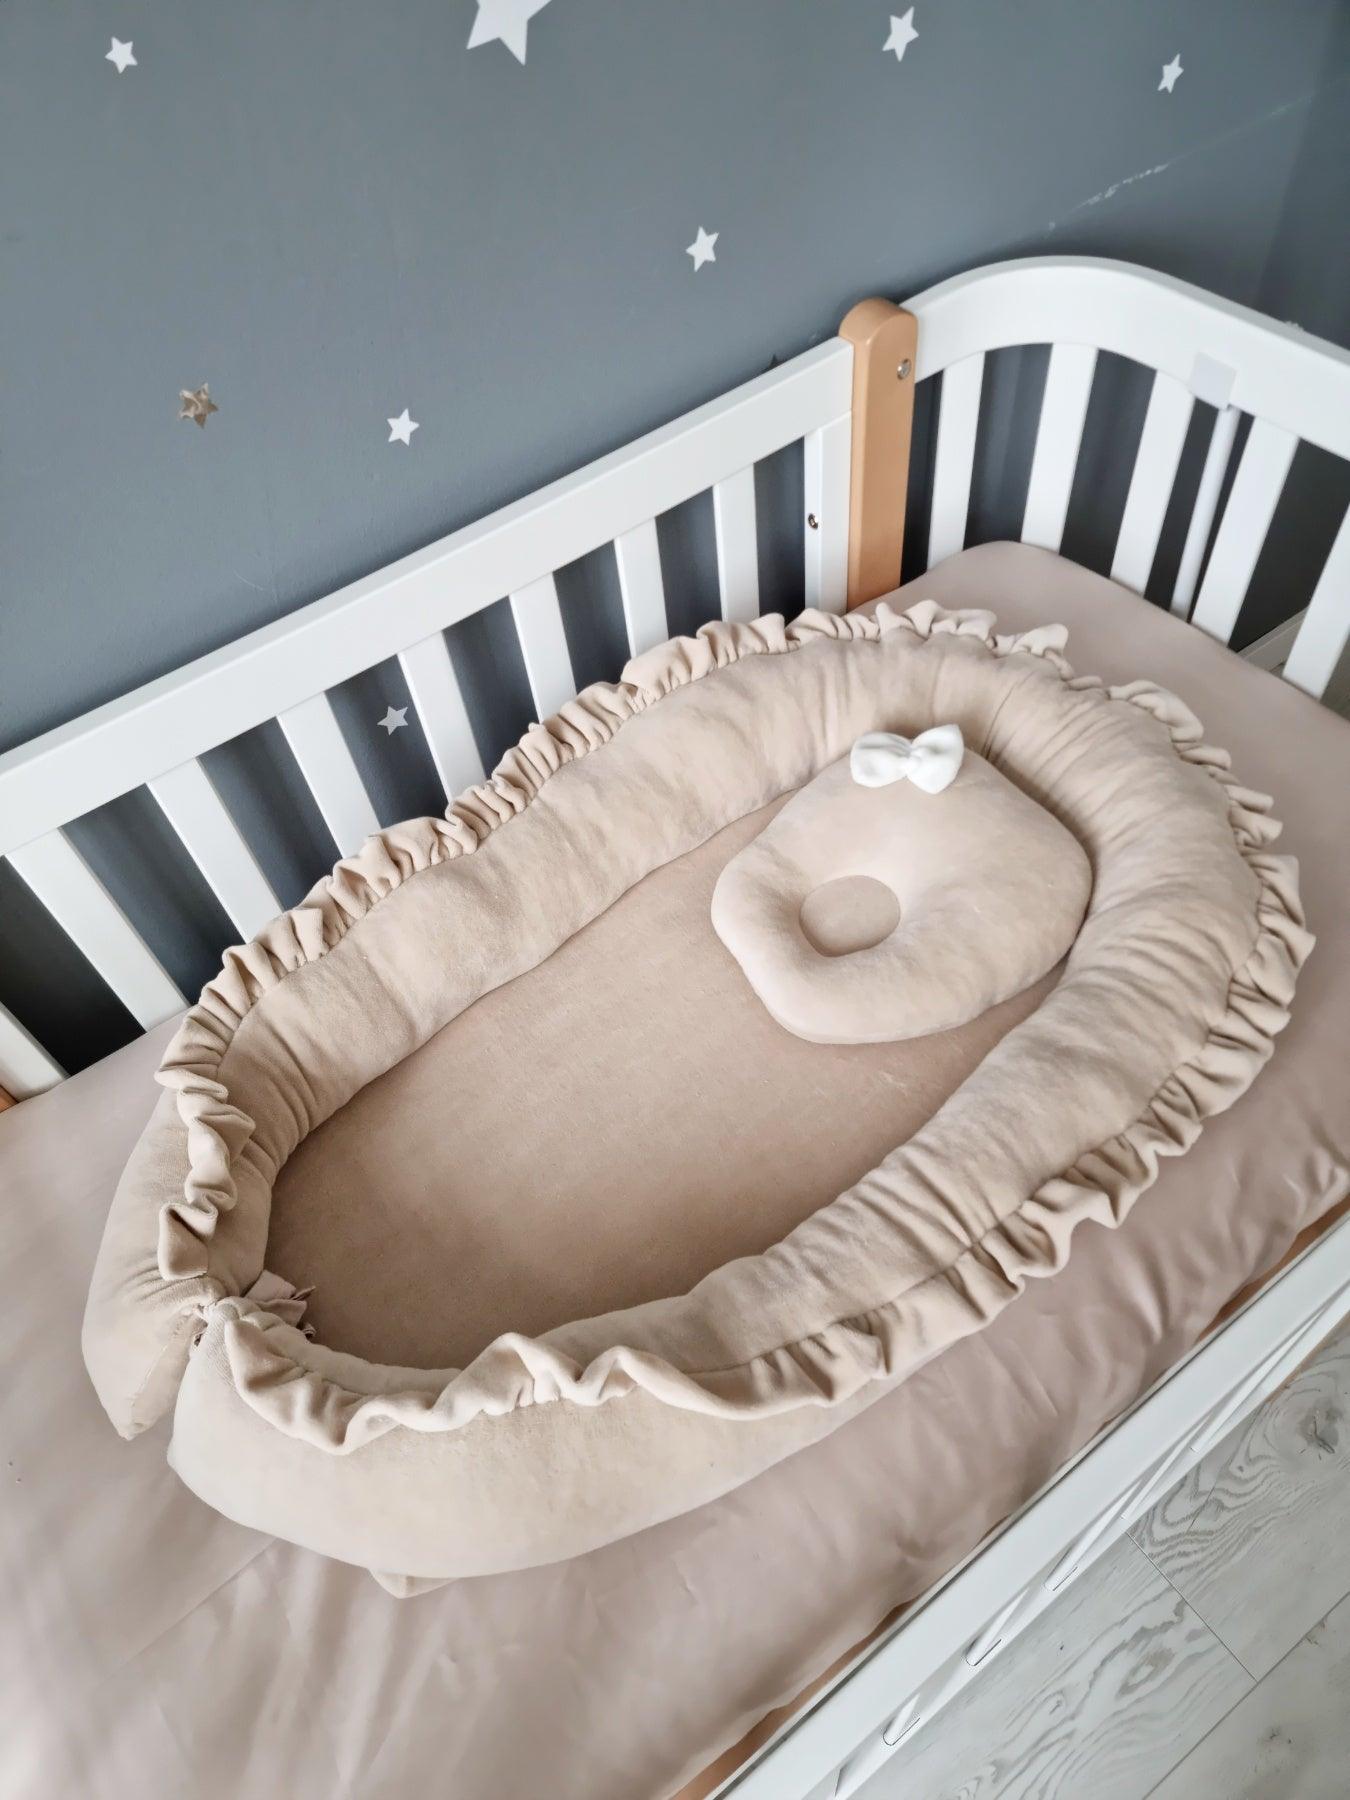 Personalized baby bedding set beige for boy or girl. Braided crib bumper - KariStudio